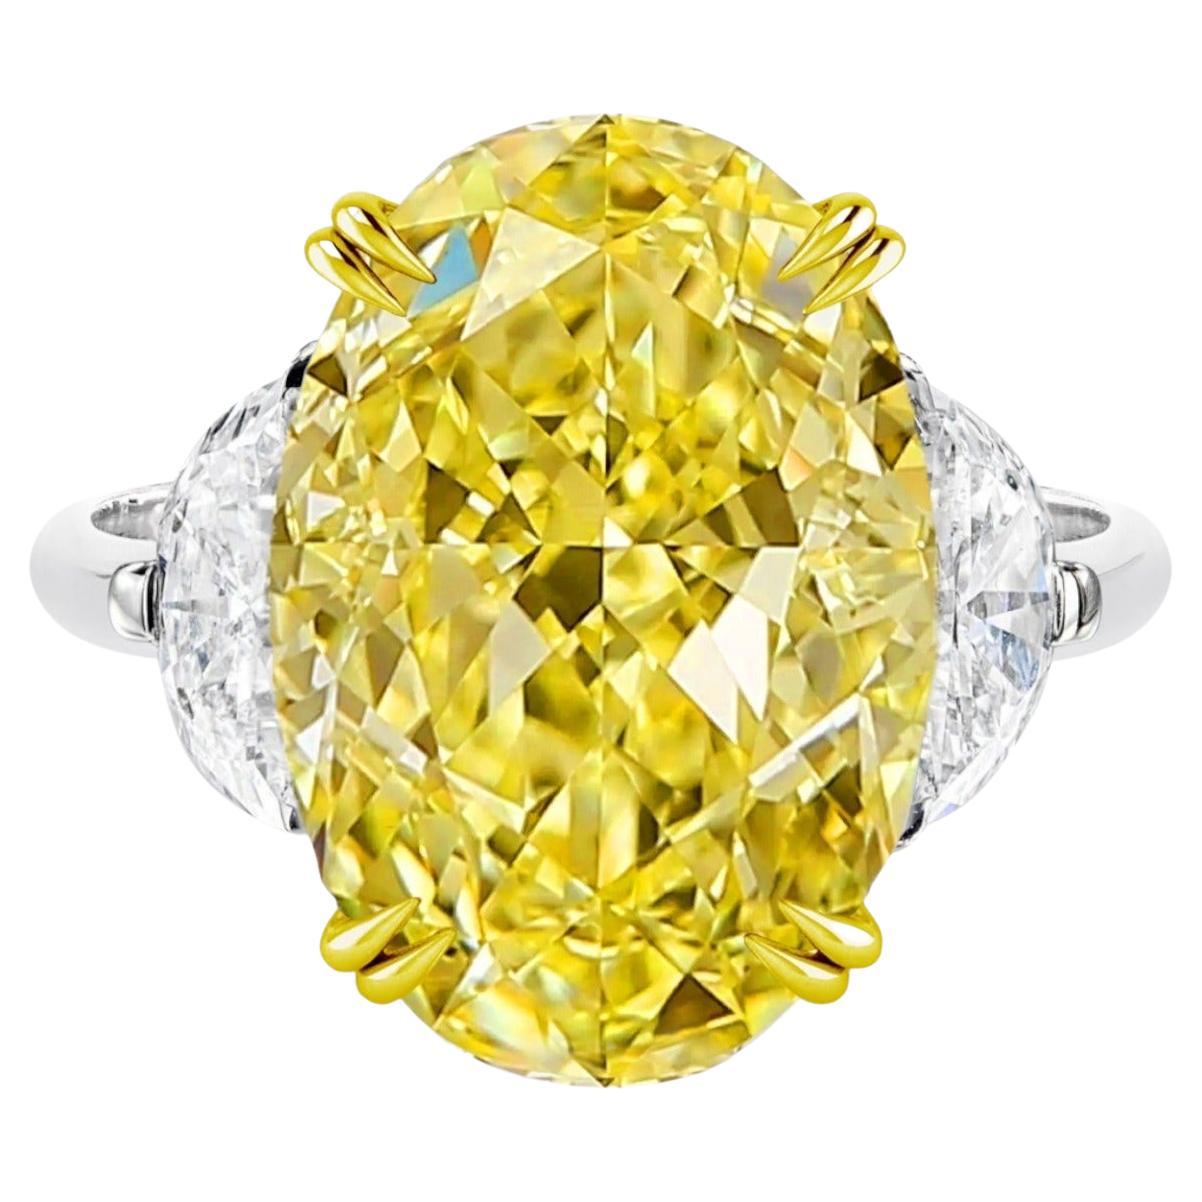 GIA Certified 5.36 Carat Fancy Intense Yellow Internally Flawless Diamond Ring